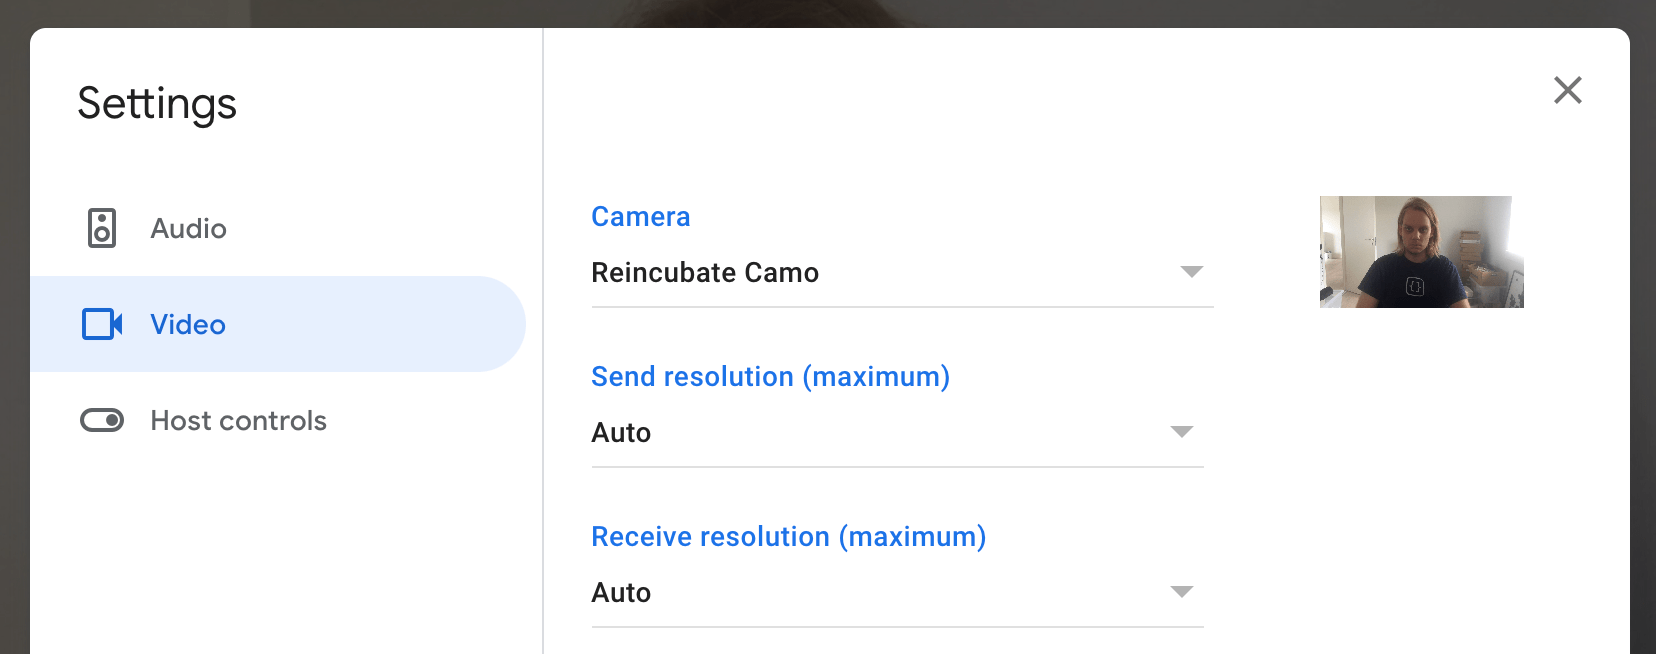 Screenshot of Google Meet with Camo selected as the camera.